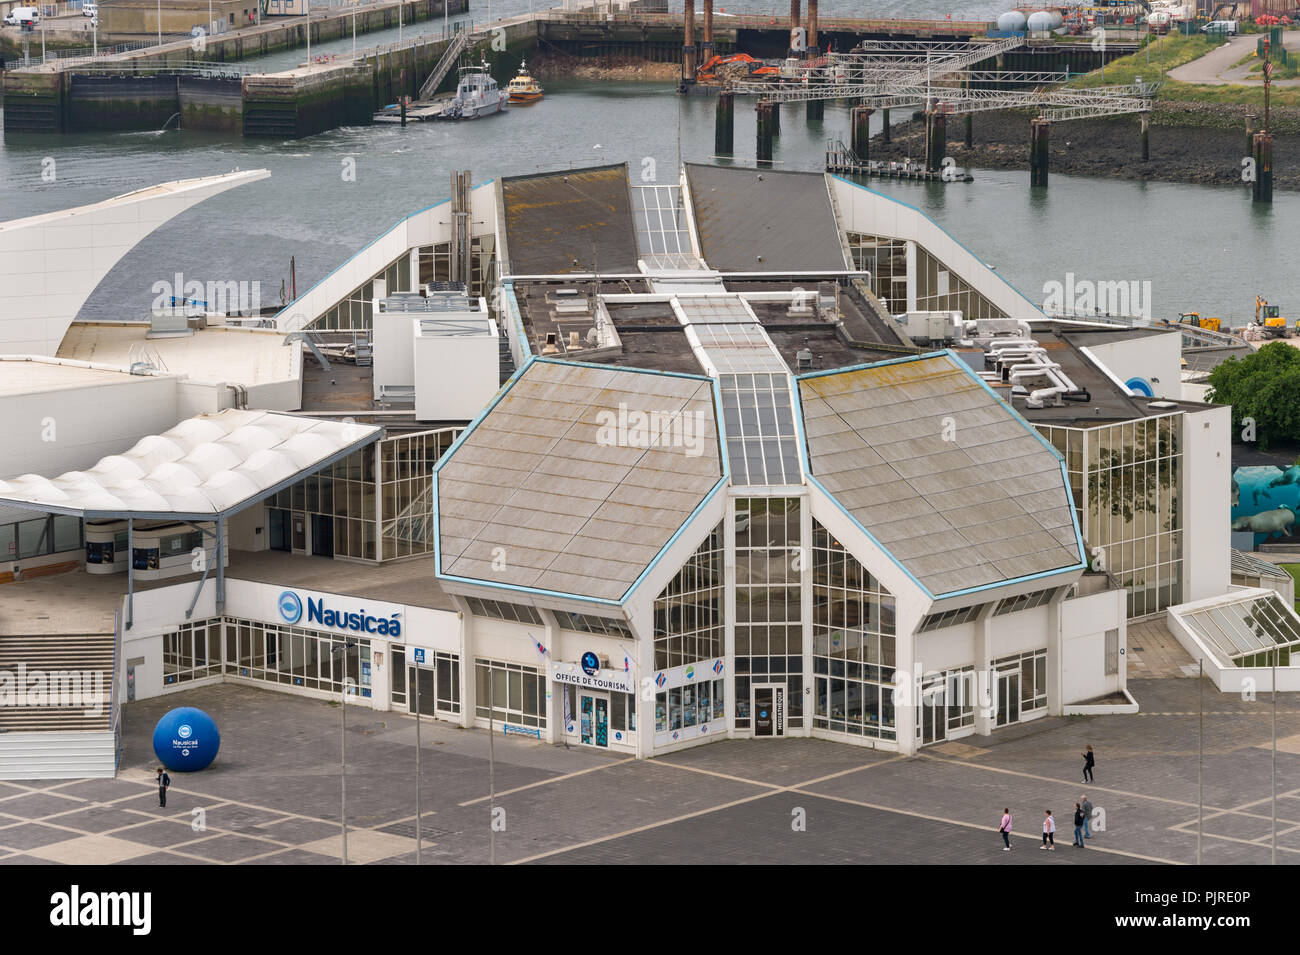 Boulogne-sur-Mer, France - 16 June 2018: Nausicaa National Sea Centre building. Stock Photo